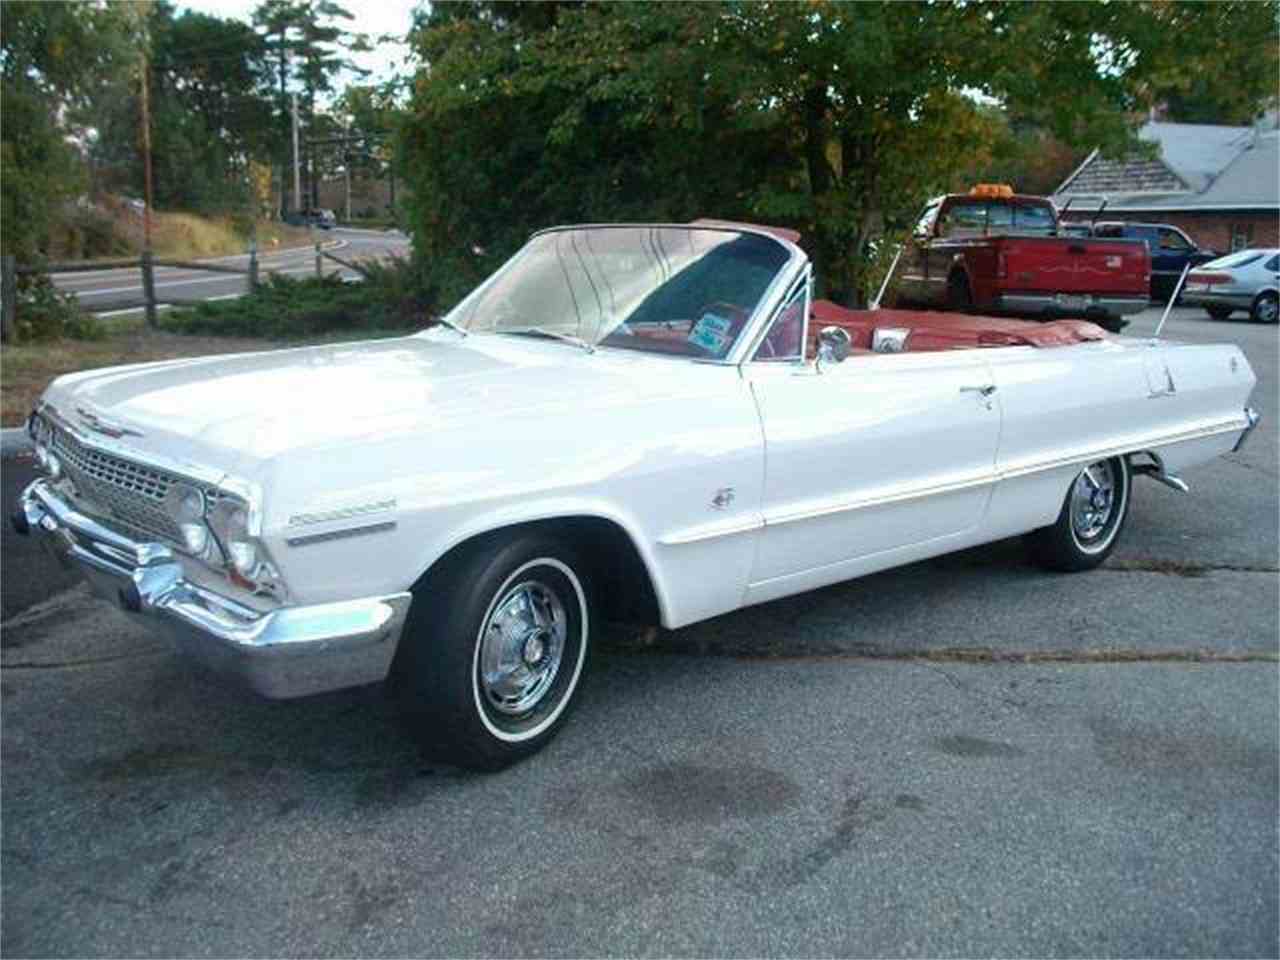 1963 Chevrolet Impala SS Convertible for Sale | ClassicCars.com | CC-940955